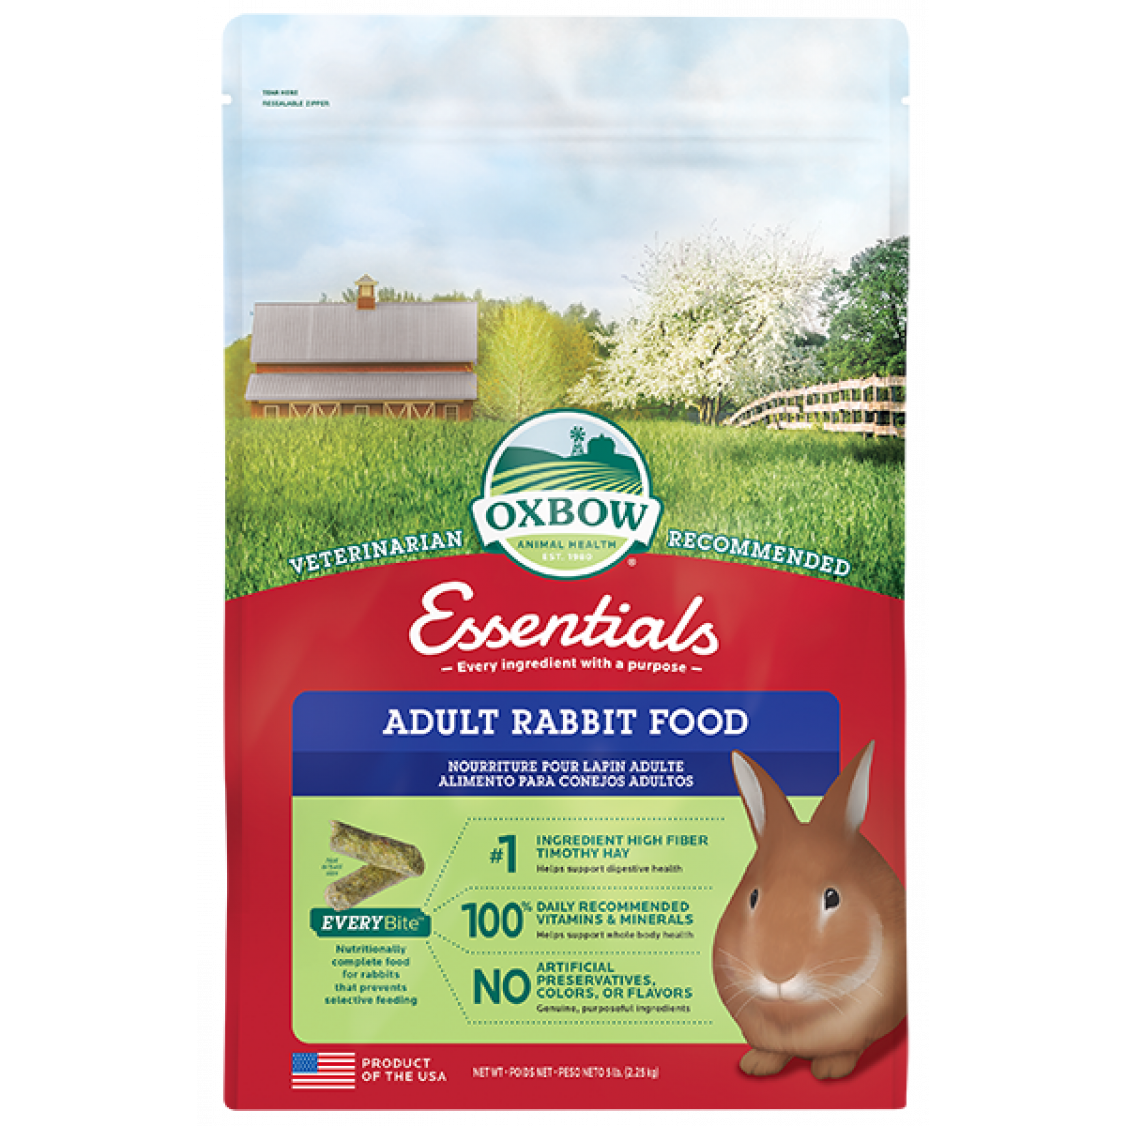 Oxbow Essentials - Adult Rabbit Food